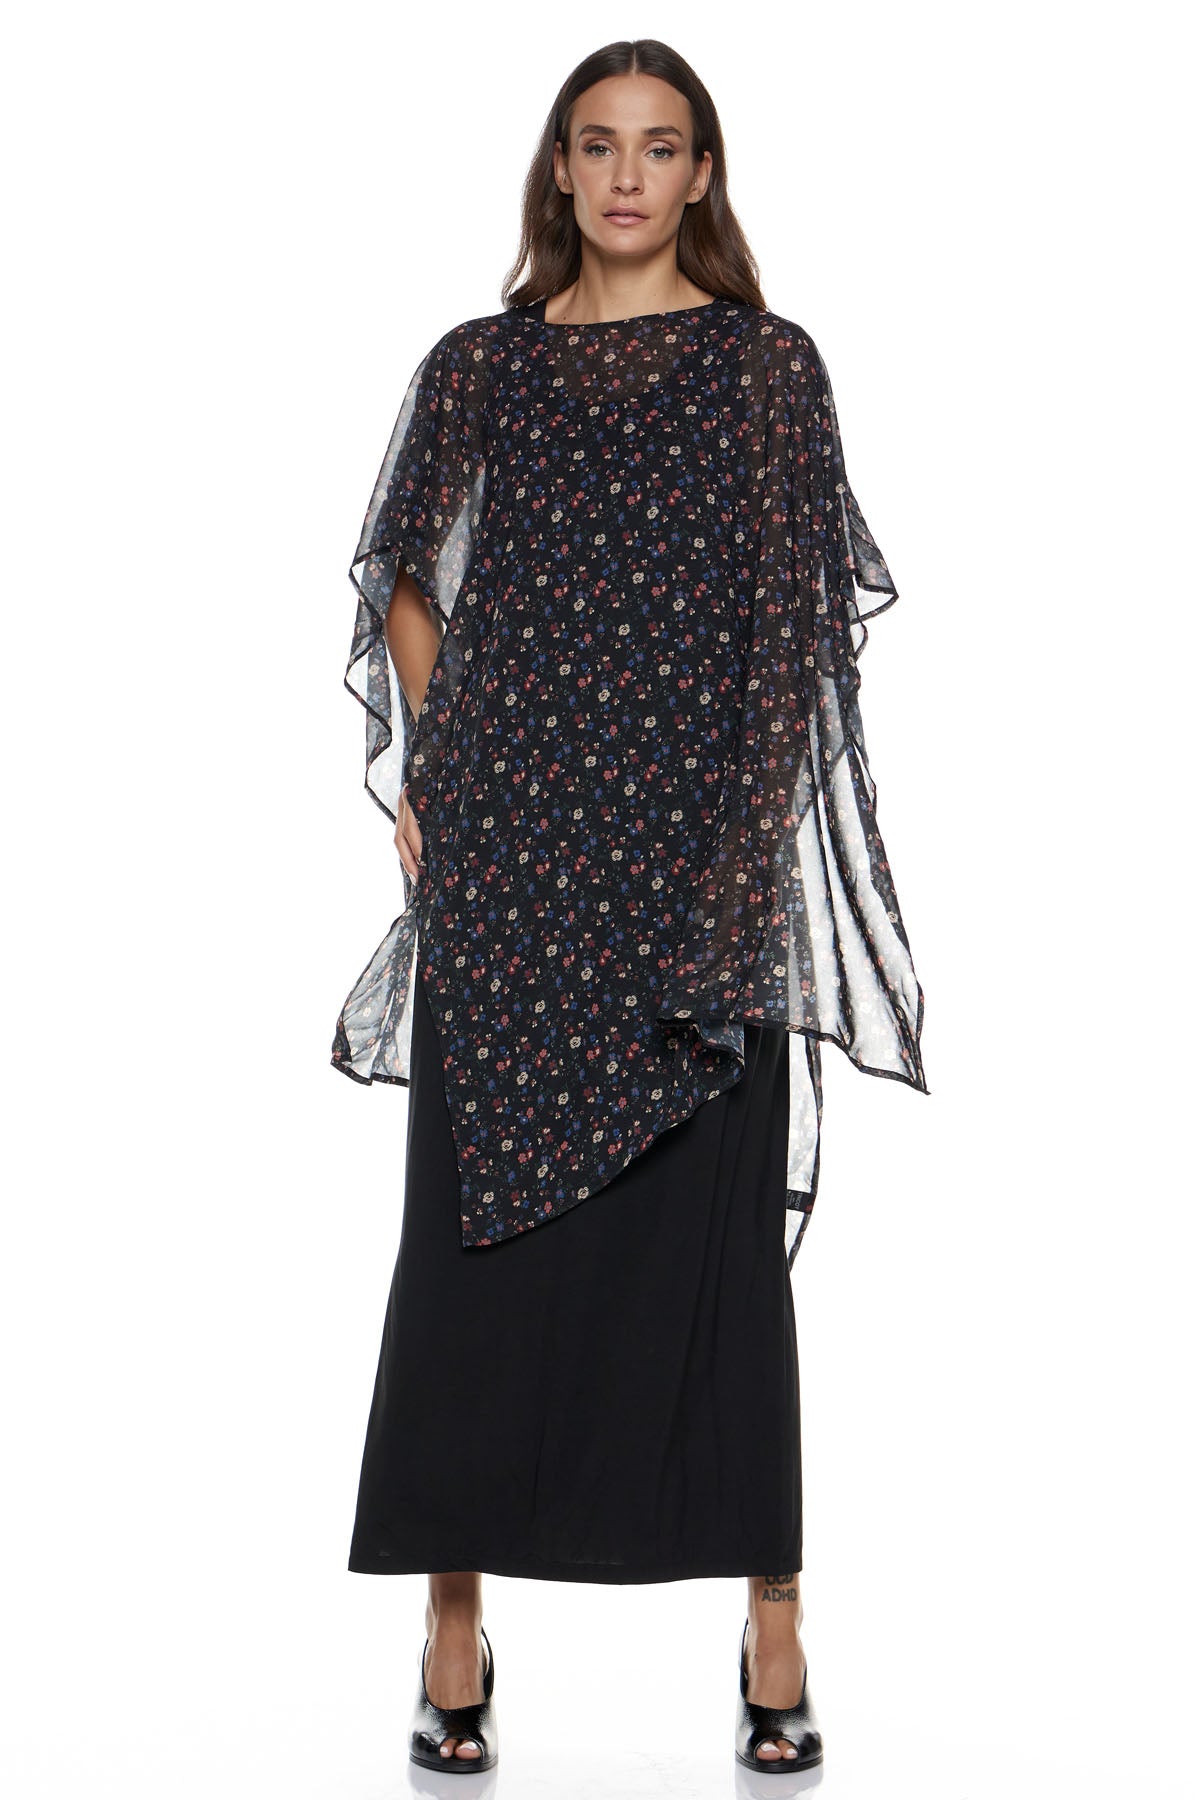 Lolita Dress (Basics) Lolita & Long Scarf Combination - Black with Floral Sheer